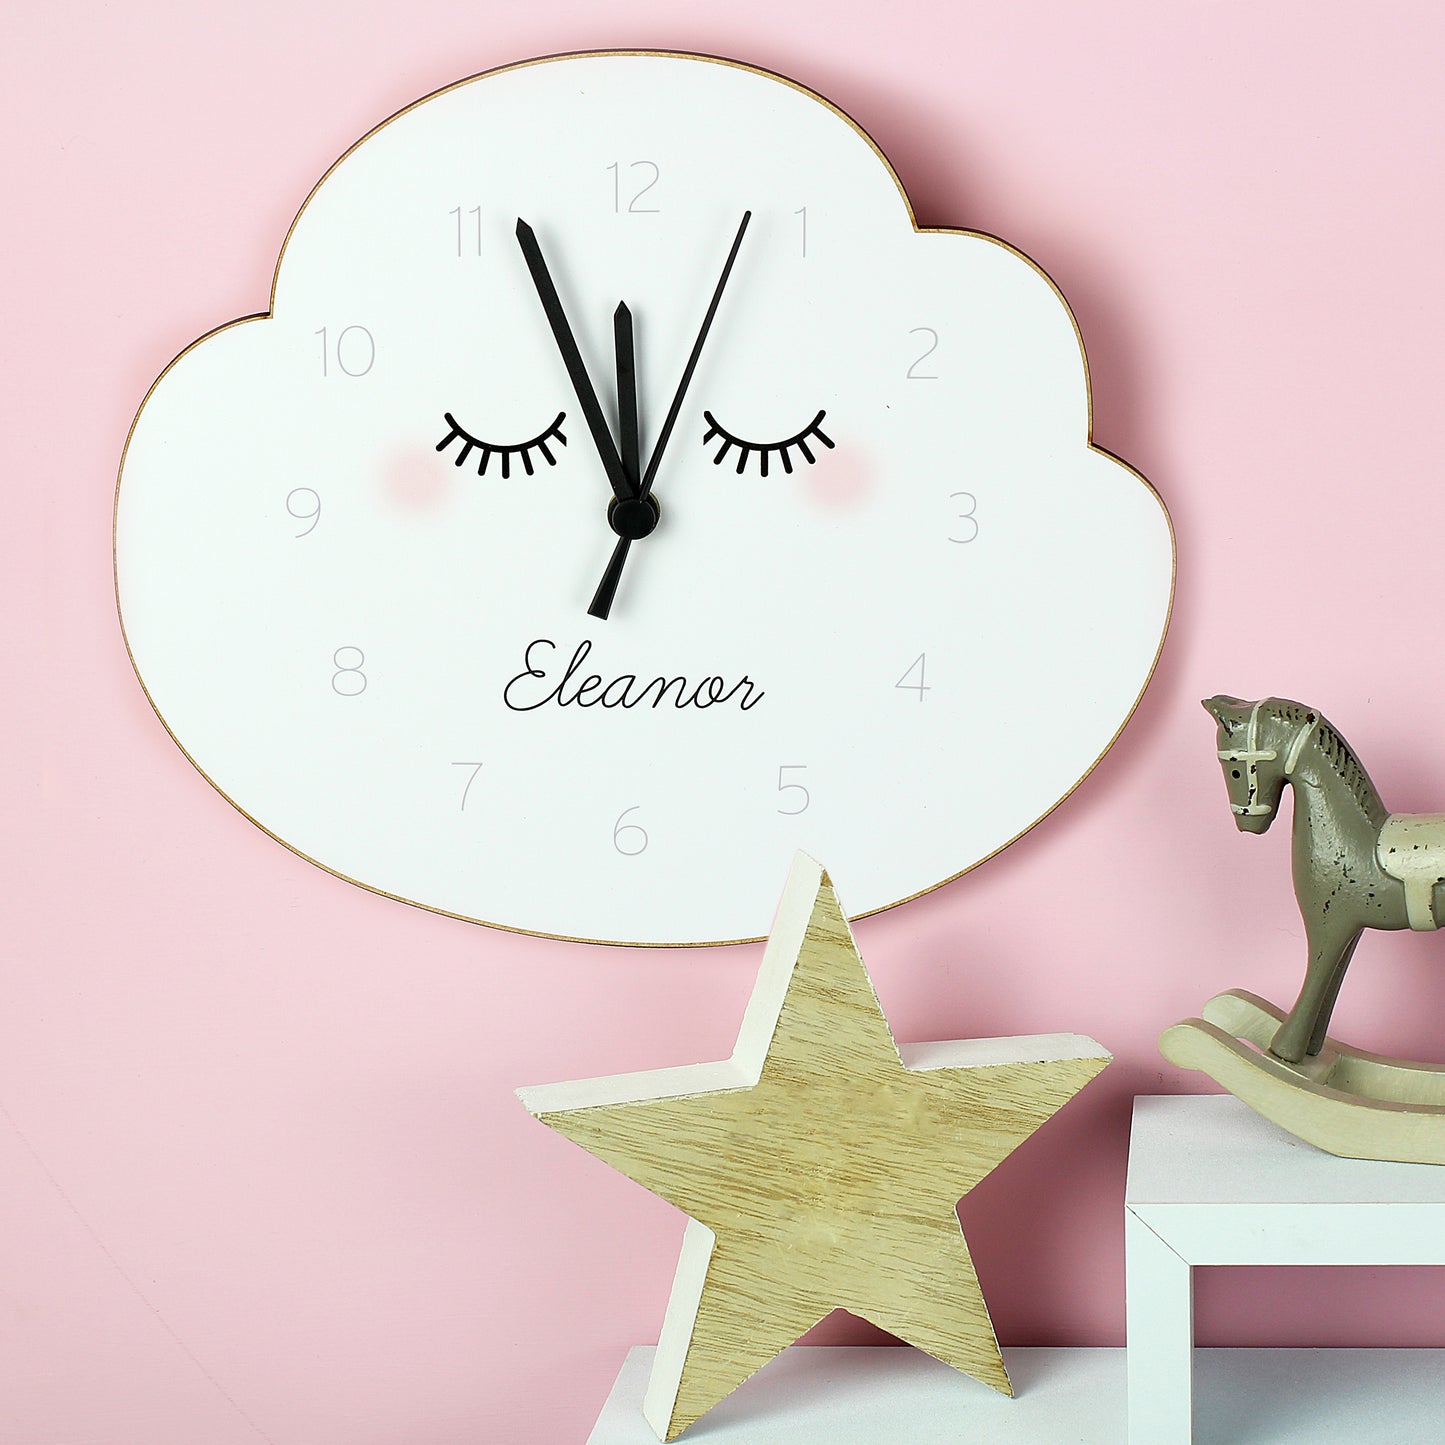 Personalised Eyelash Cloud Shape Wooden Clock - Personalise It!